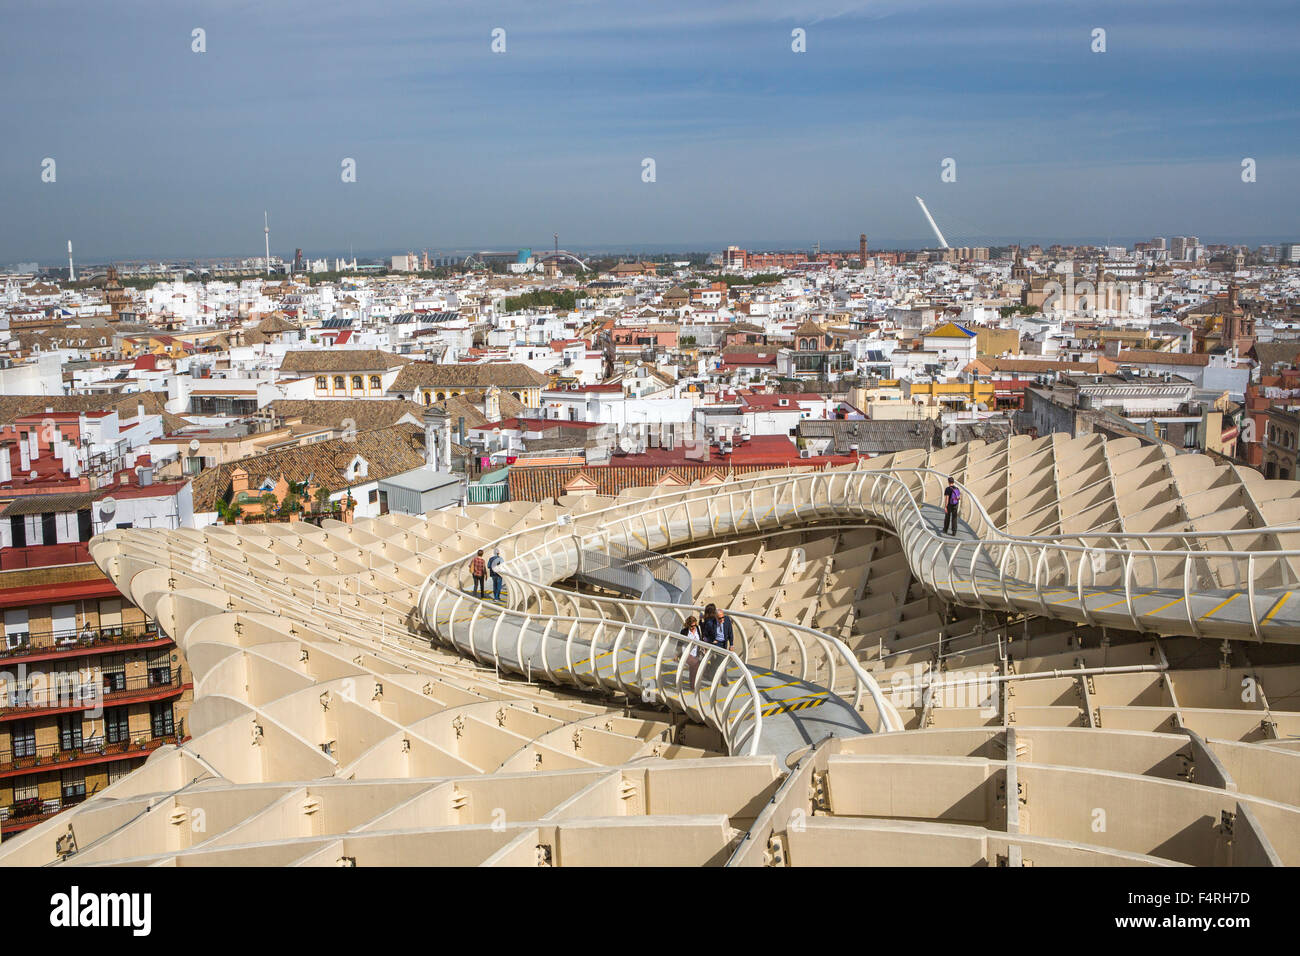 Spain, Europe, Andalusia, Region, Sevilla, Seville, City, Incarnation Square, Metropol Parasol, Las Setas, architecture, Stock Photo